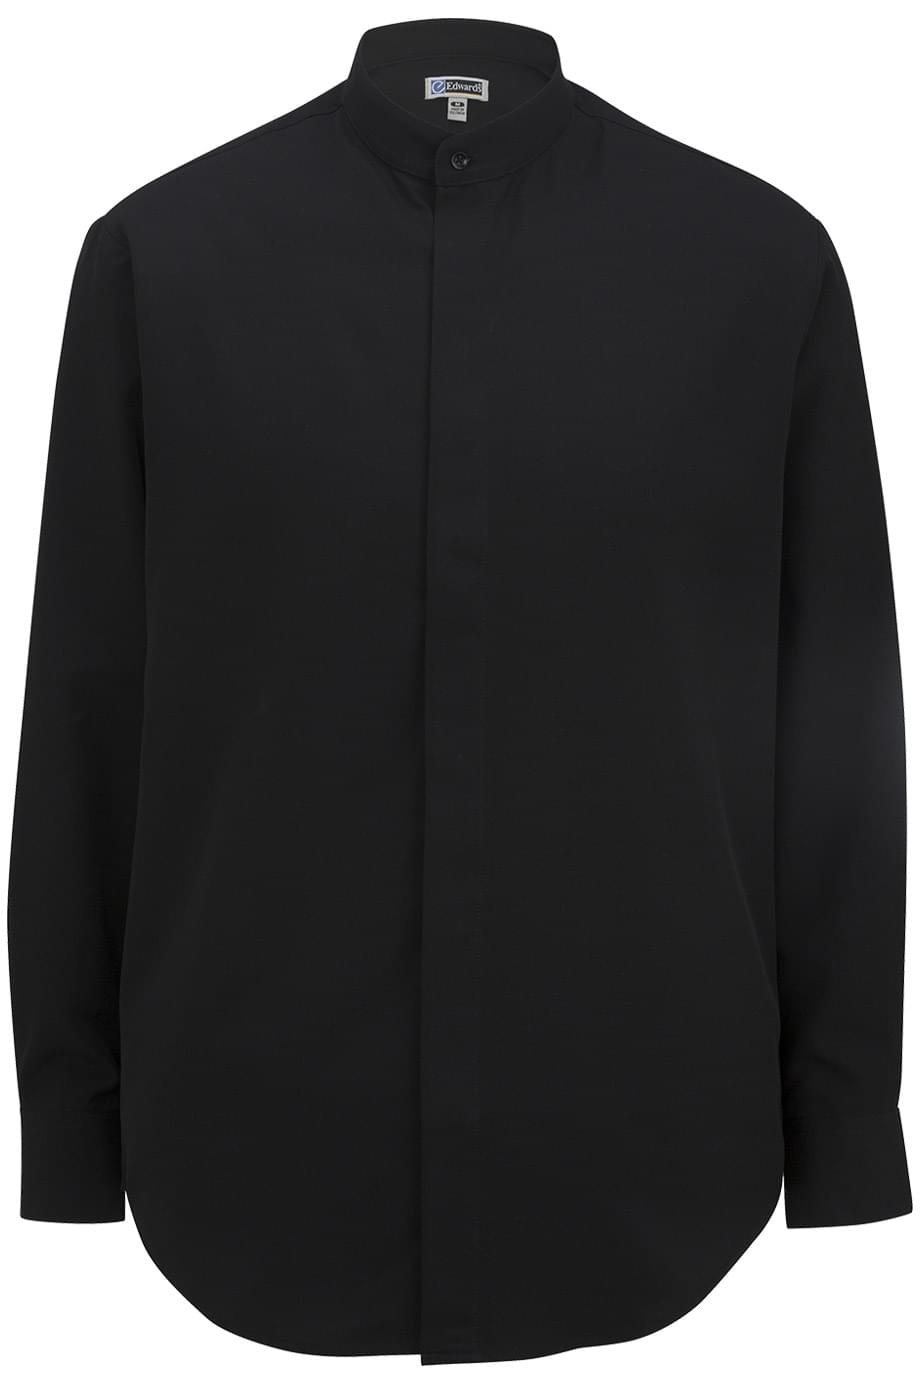 BANDED COLLAR BATISTE SHIRT | Edwards Garment